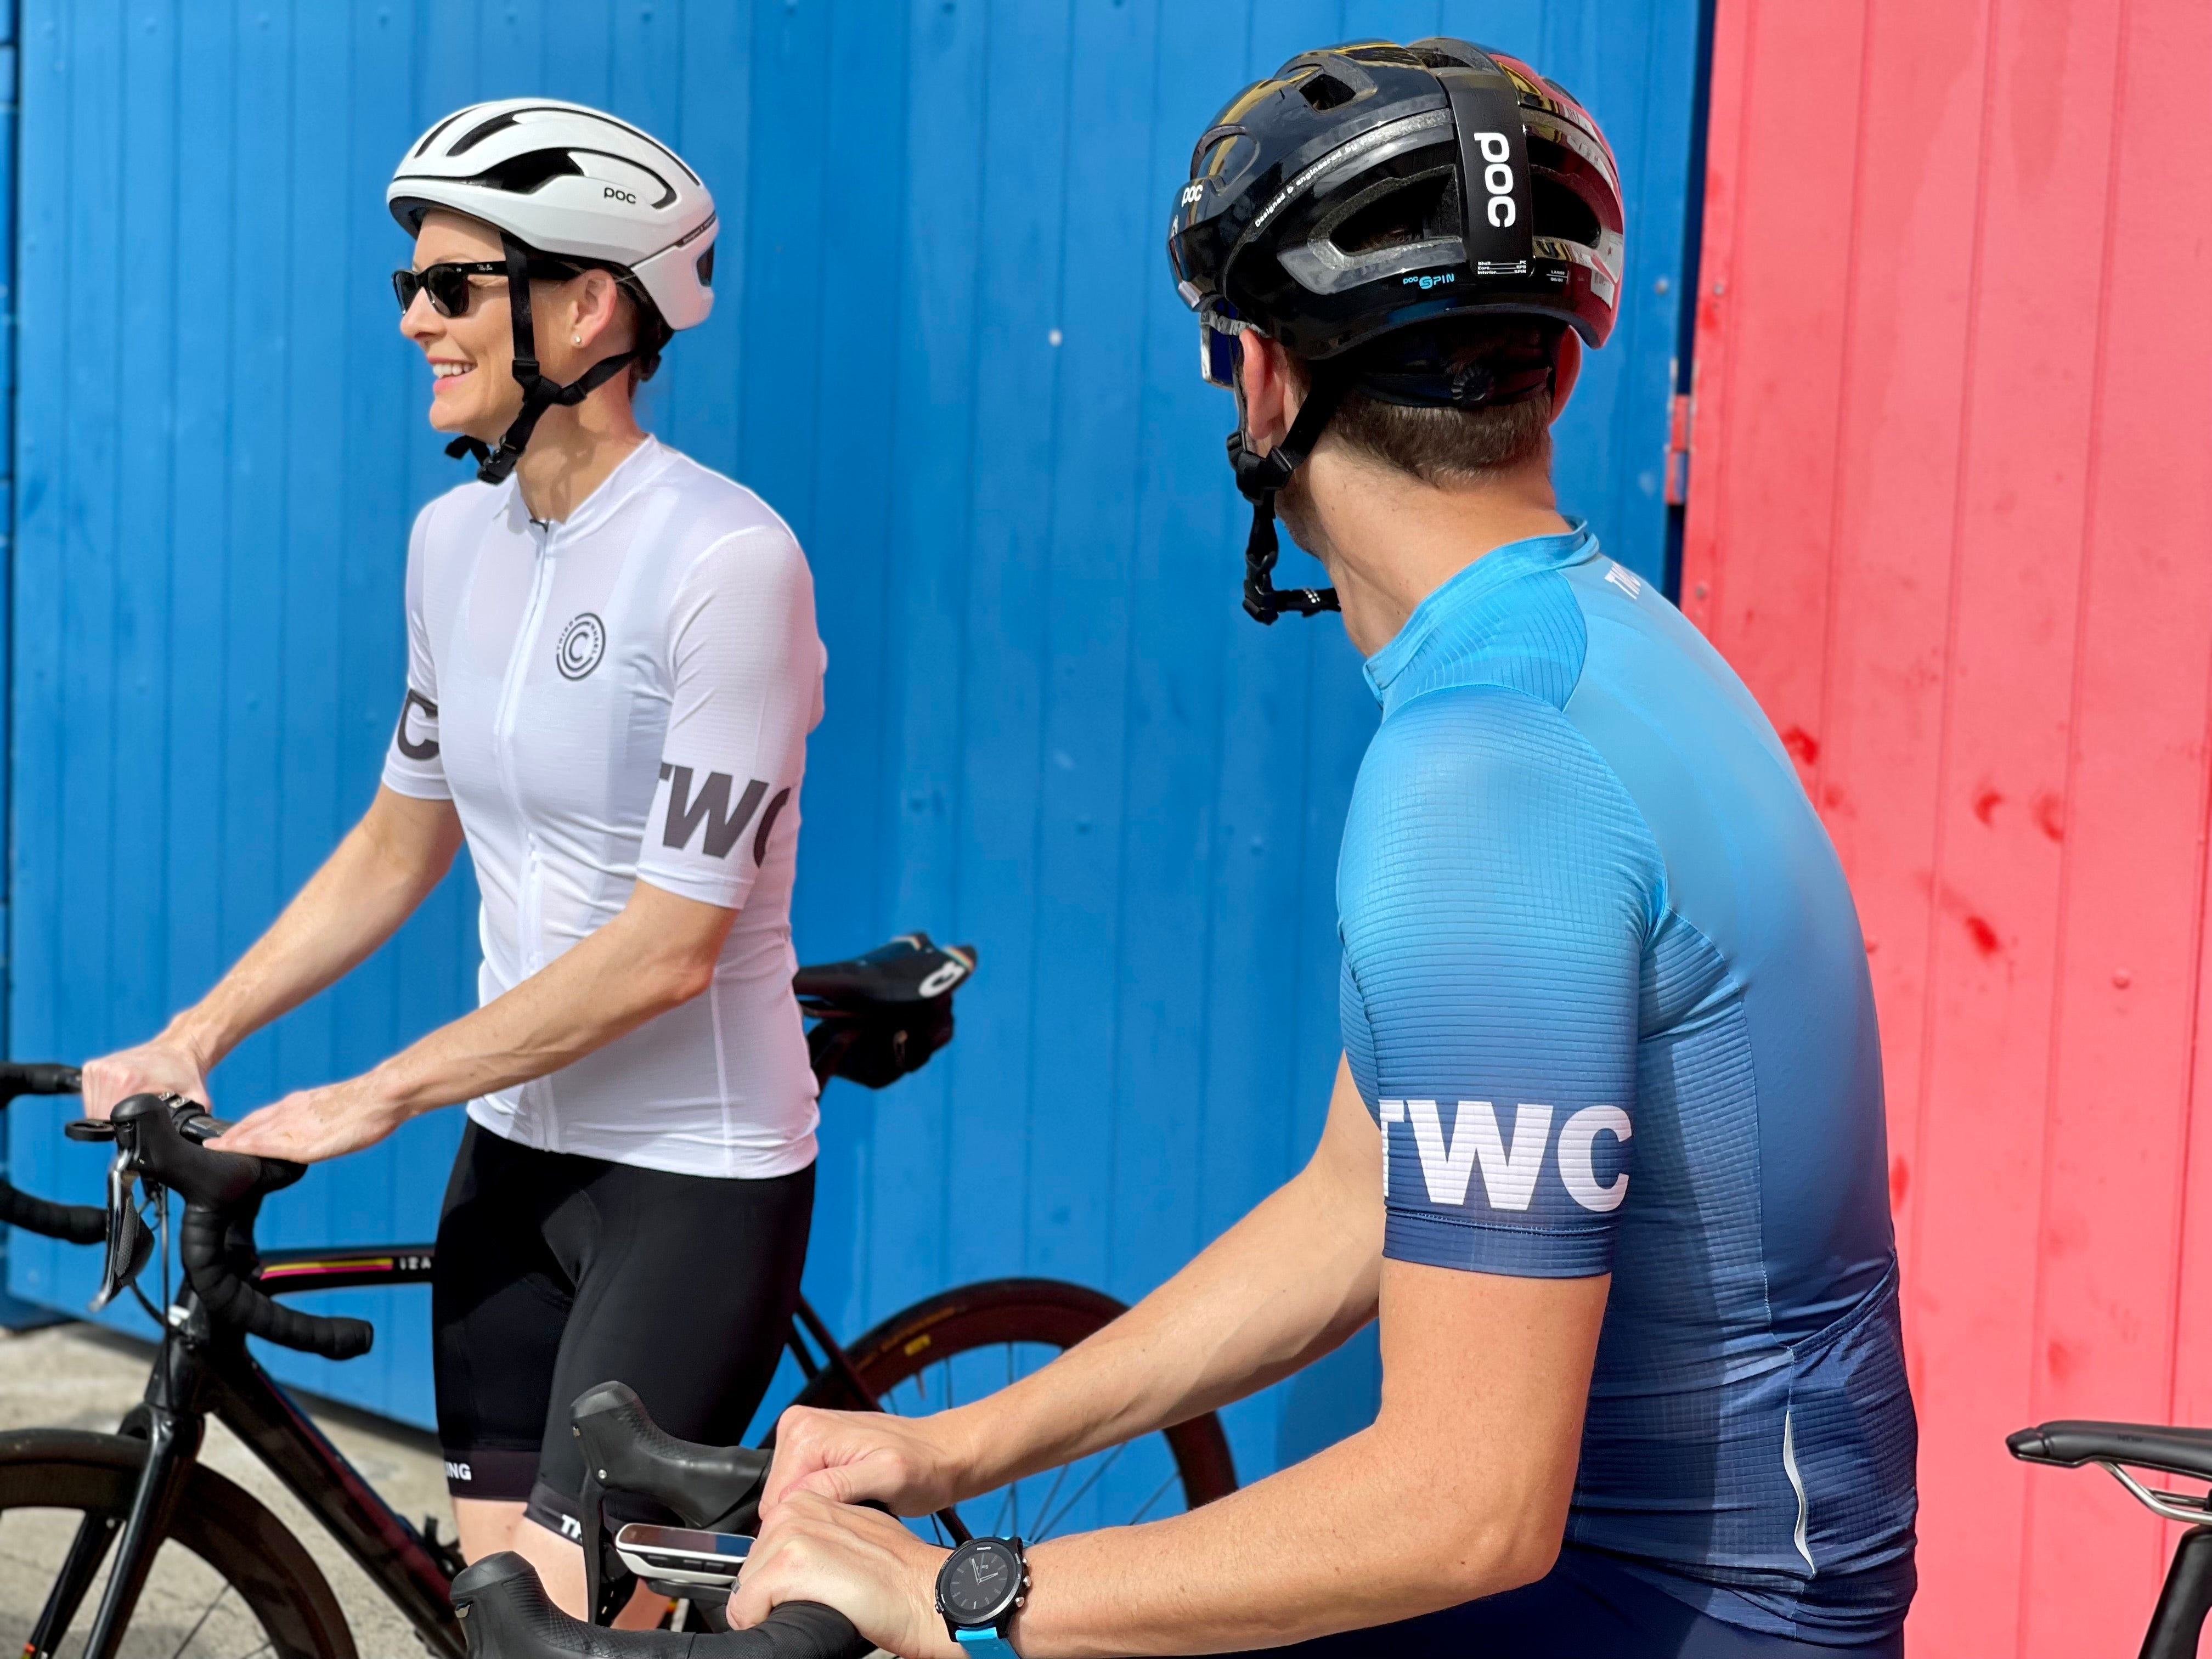 TWC White Cycling Jersey